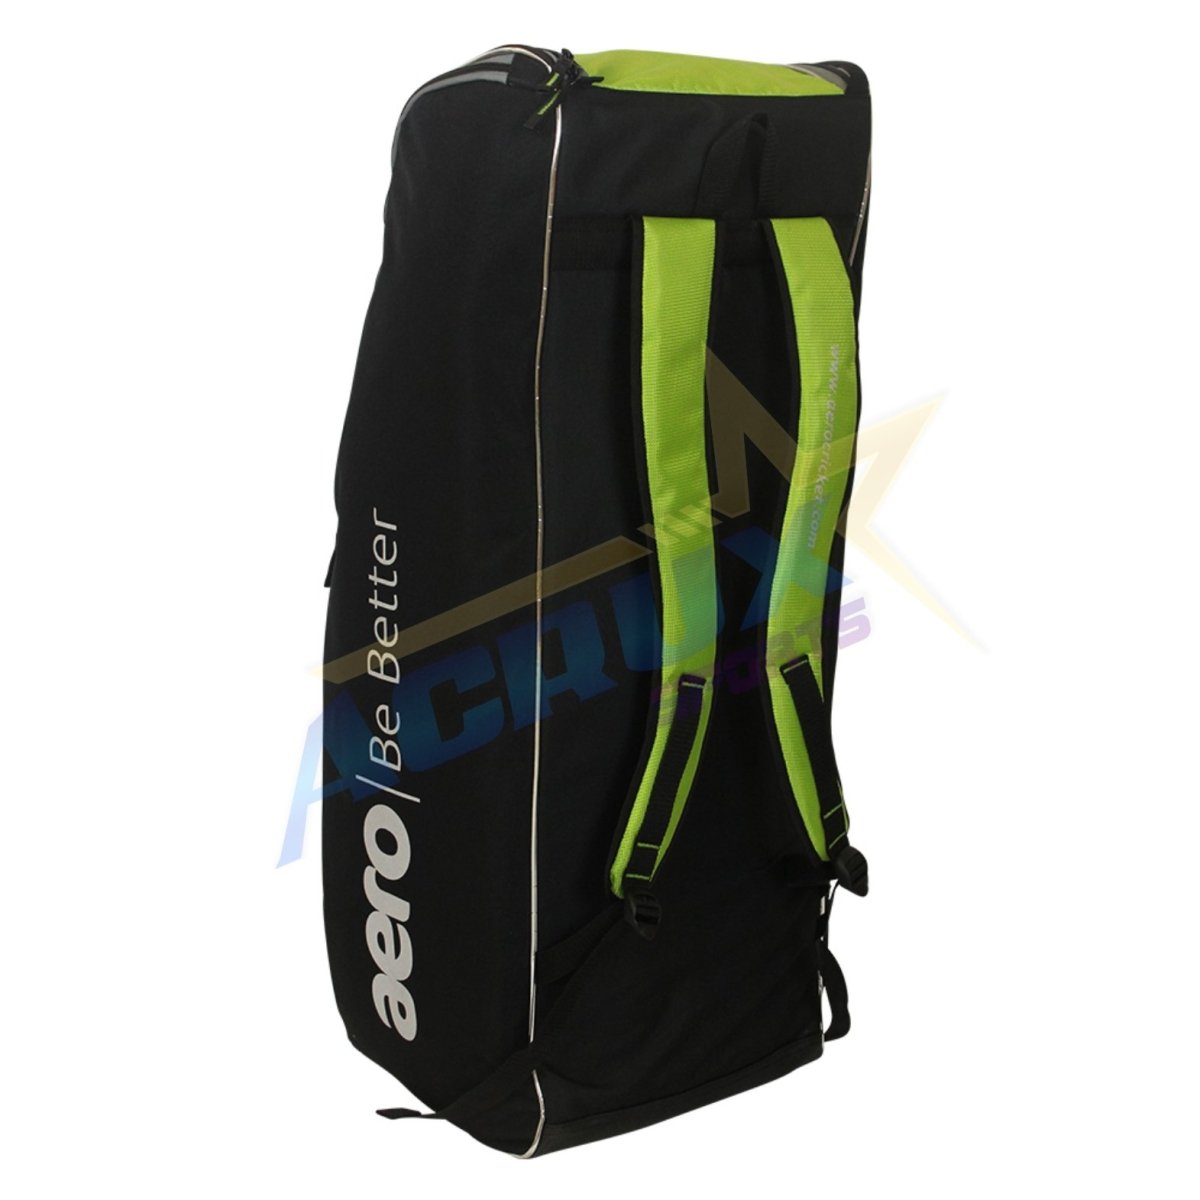 Aero B2 Midi Duffle Cricket Kit Bag.